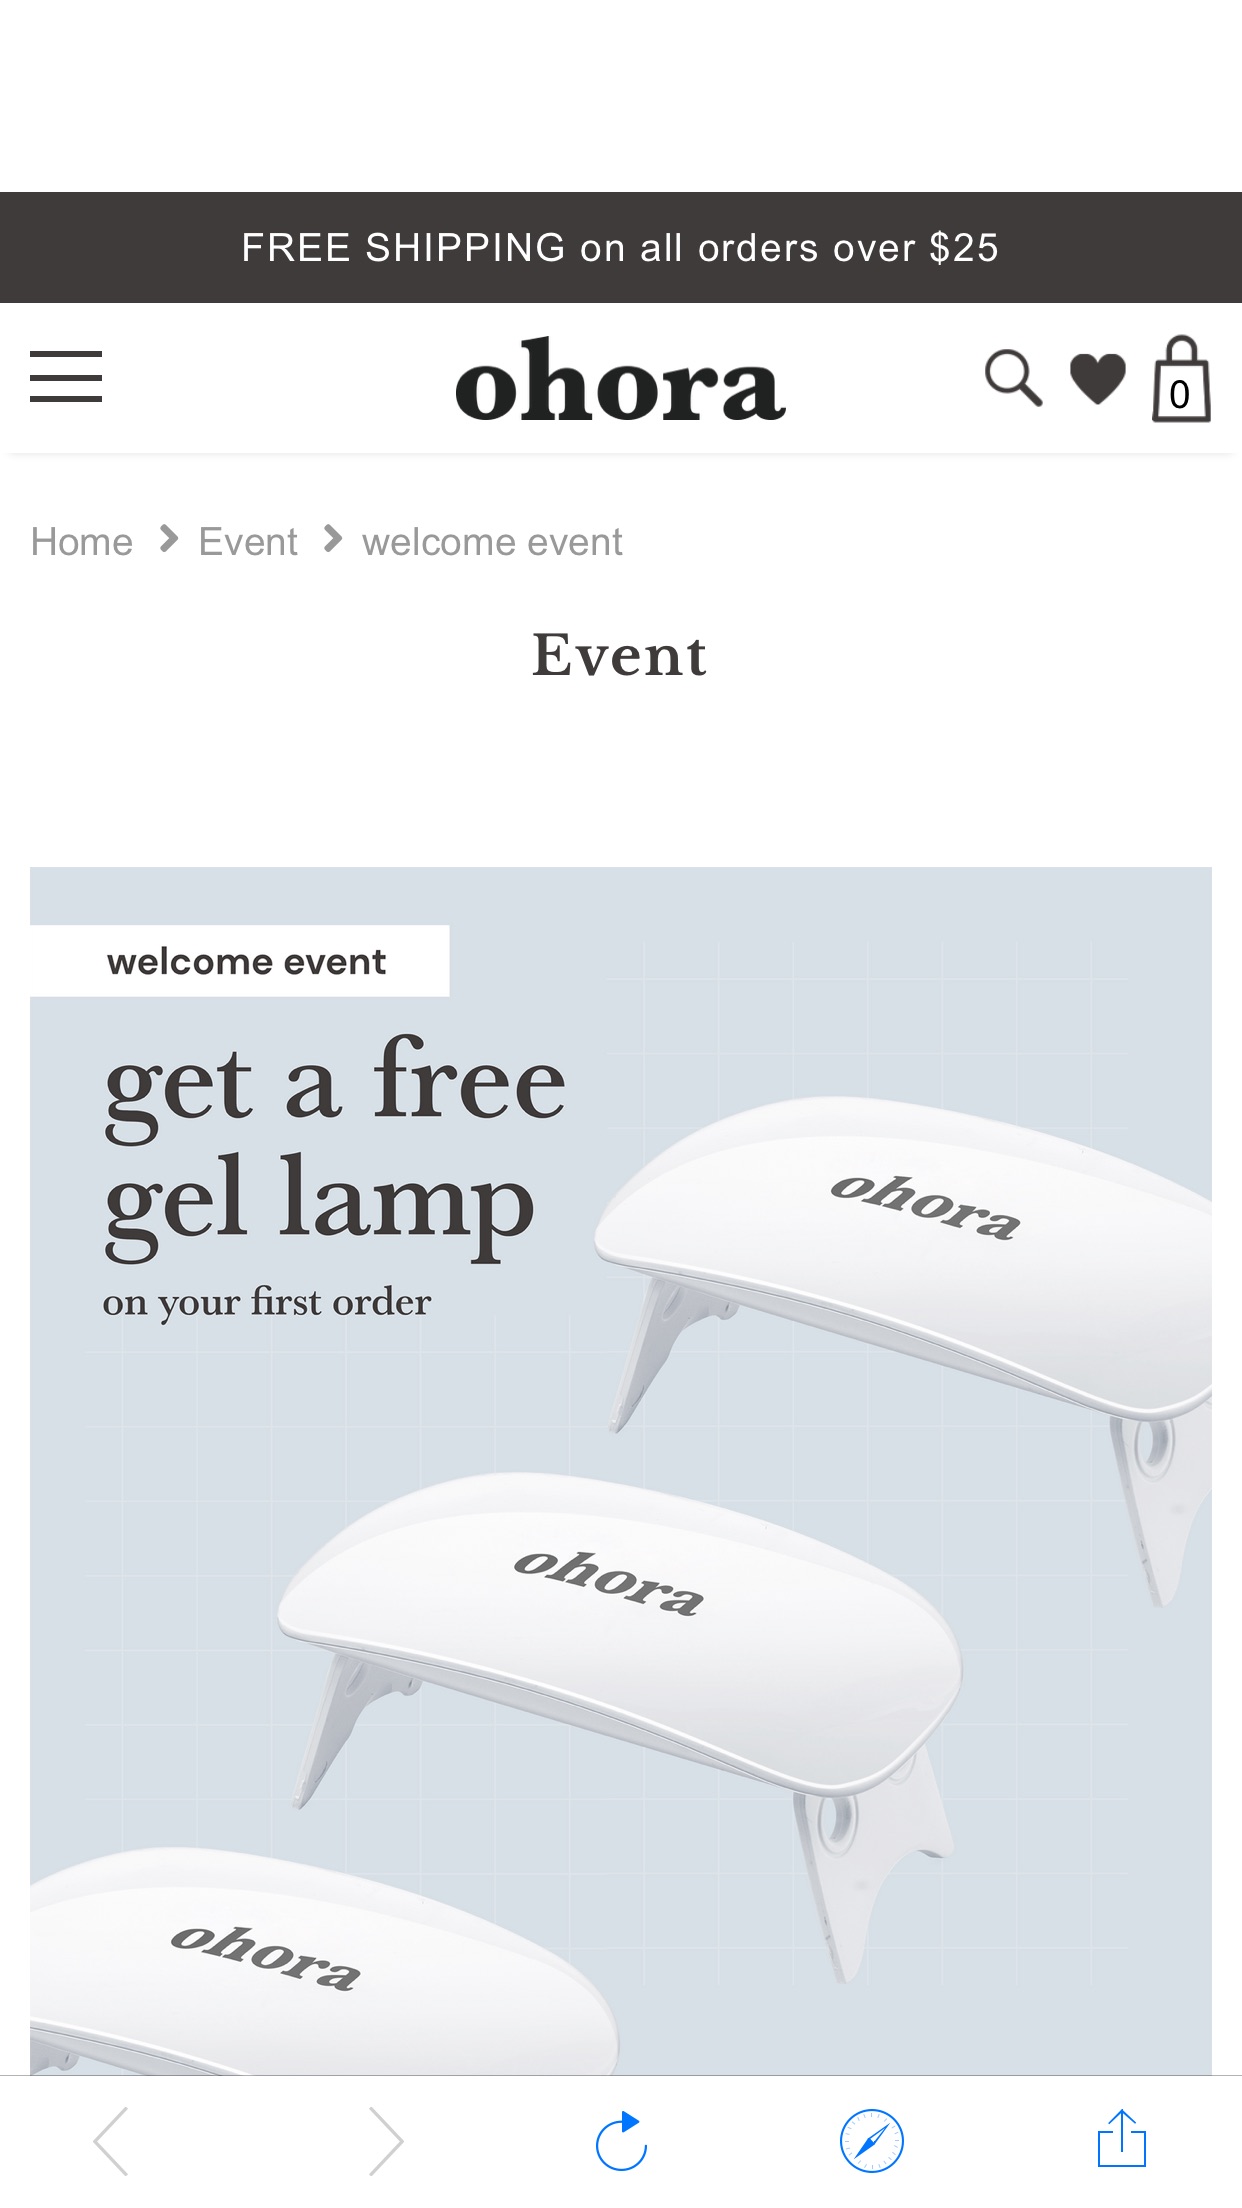 welcome event | ohora usa Event blog | ohora usa指甲贴首单免费赠送Gel Lamp